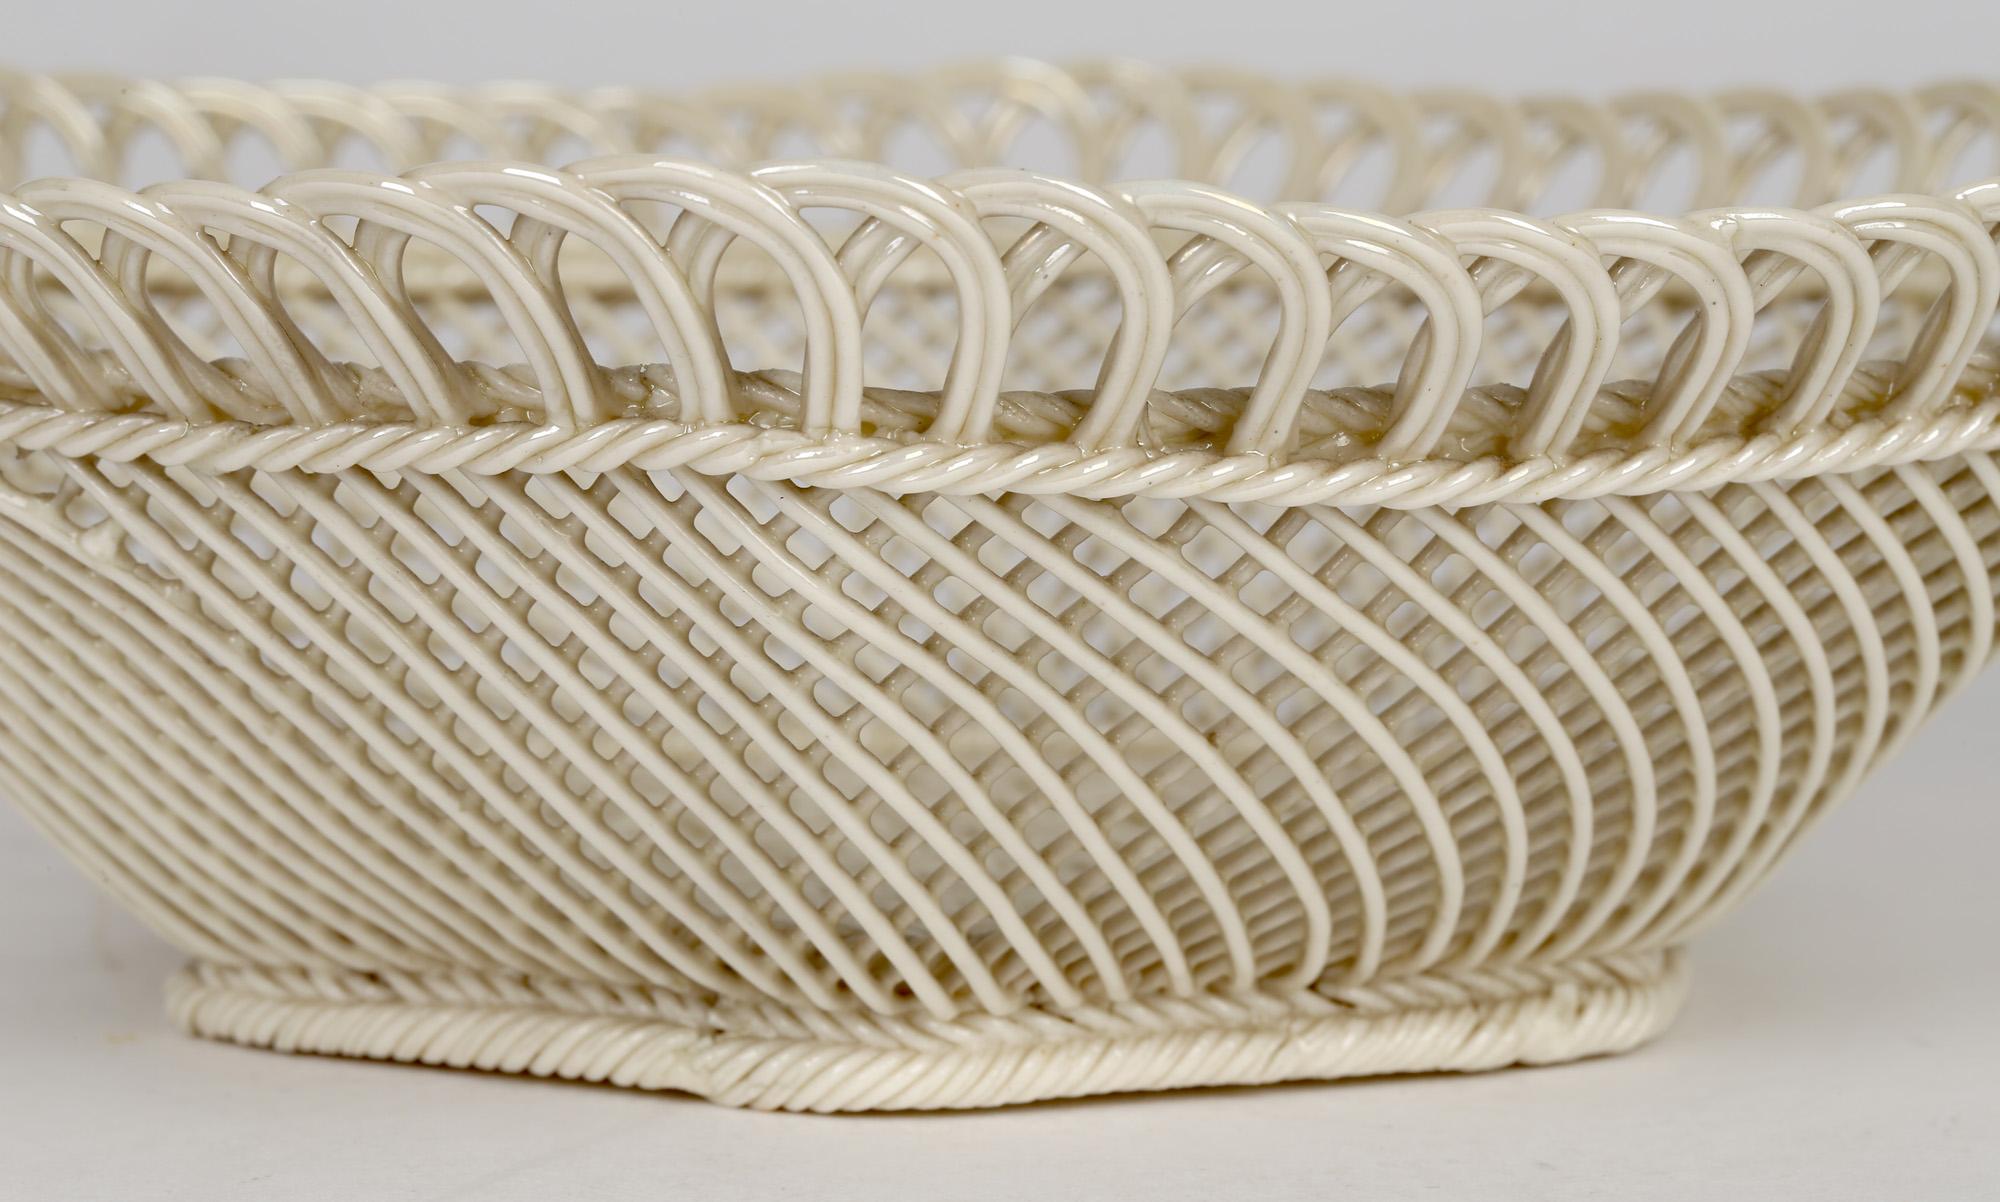 Belleek Irish Antique Porcelain Hexagonal Shaped Lustre Glazed Basket For Sale 11